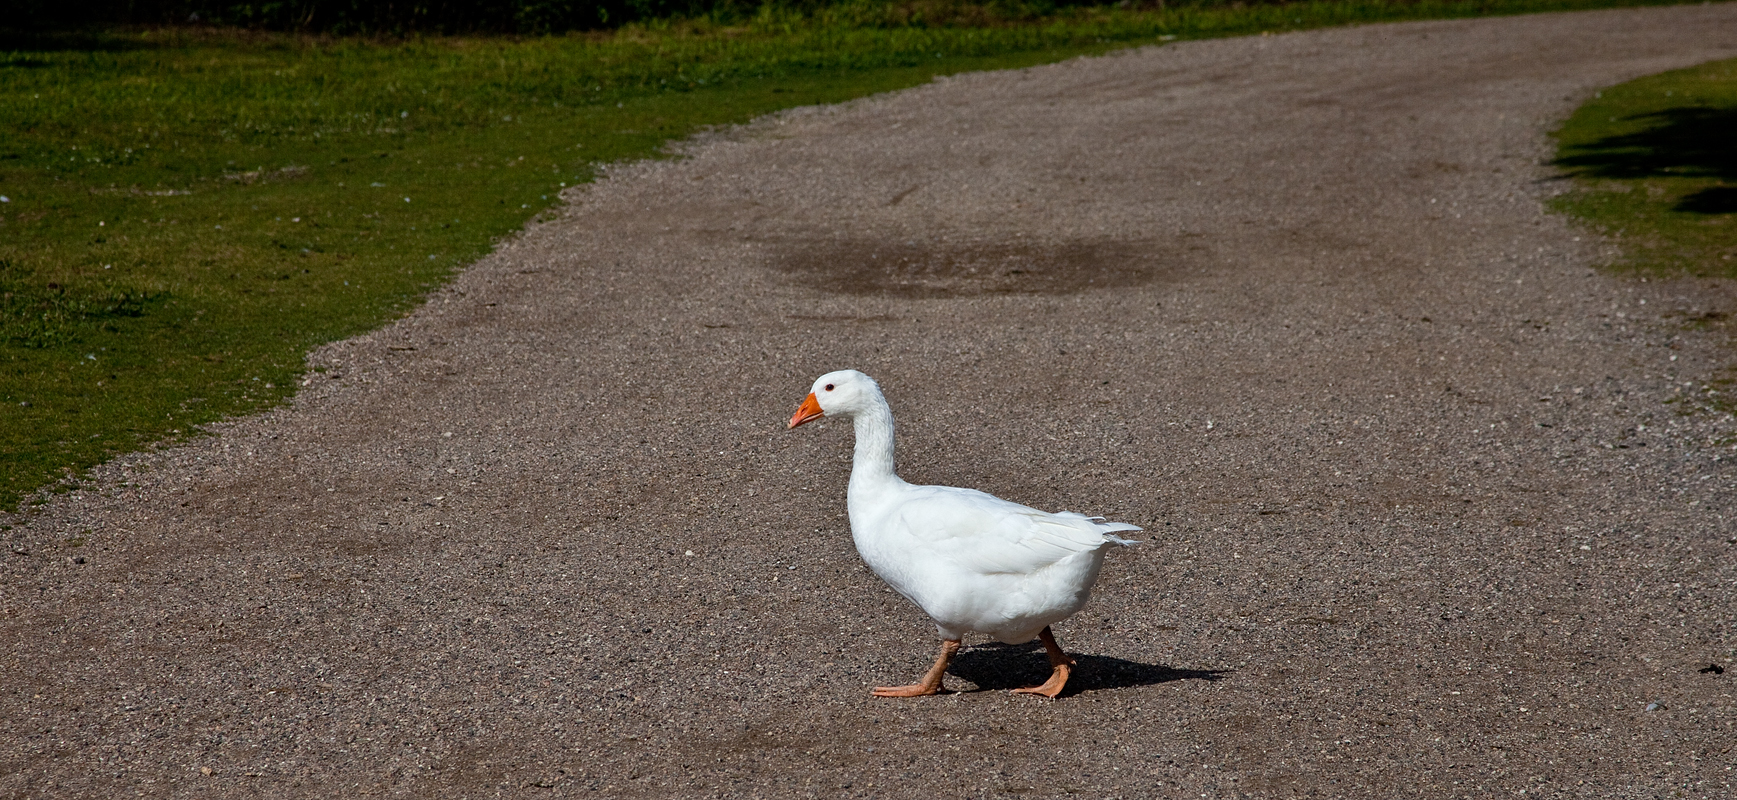 Goose walk